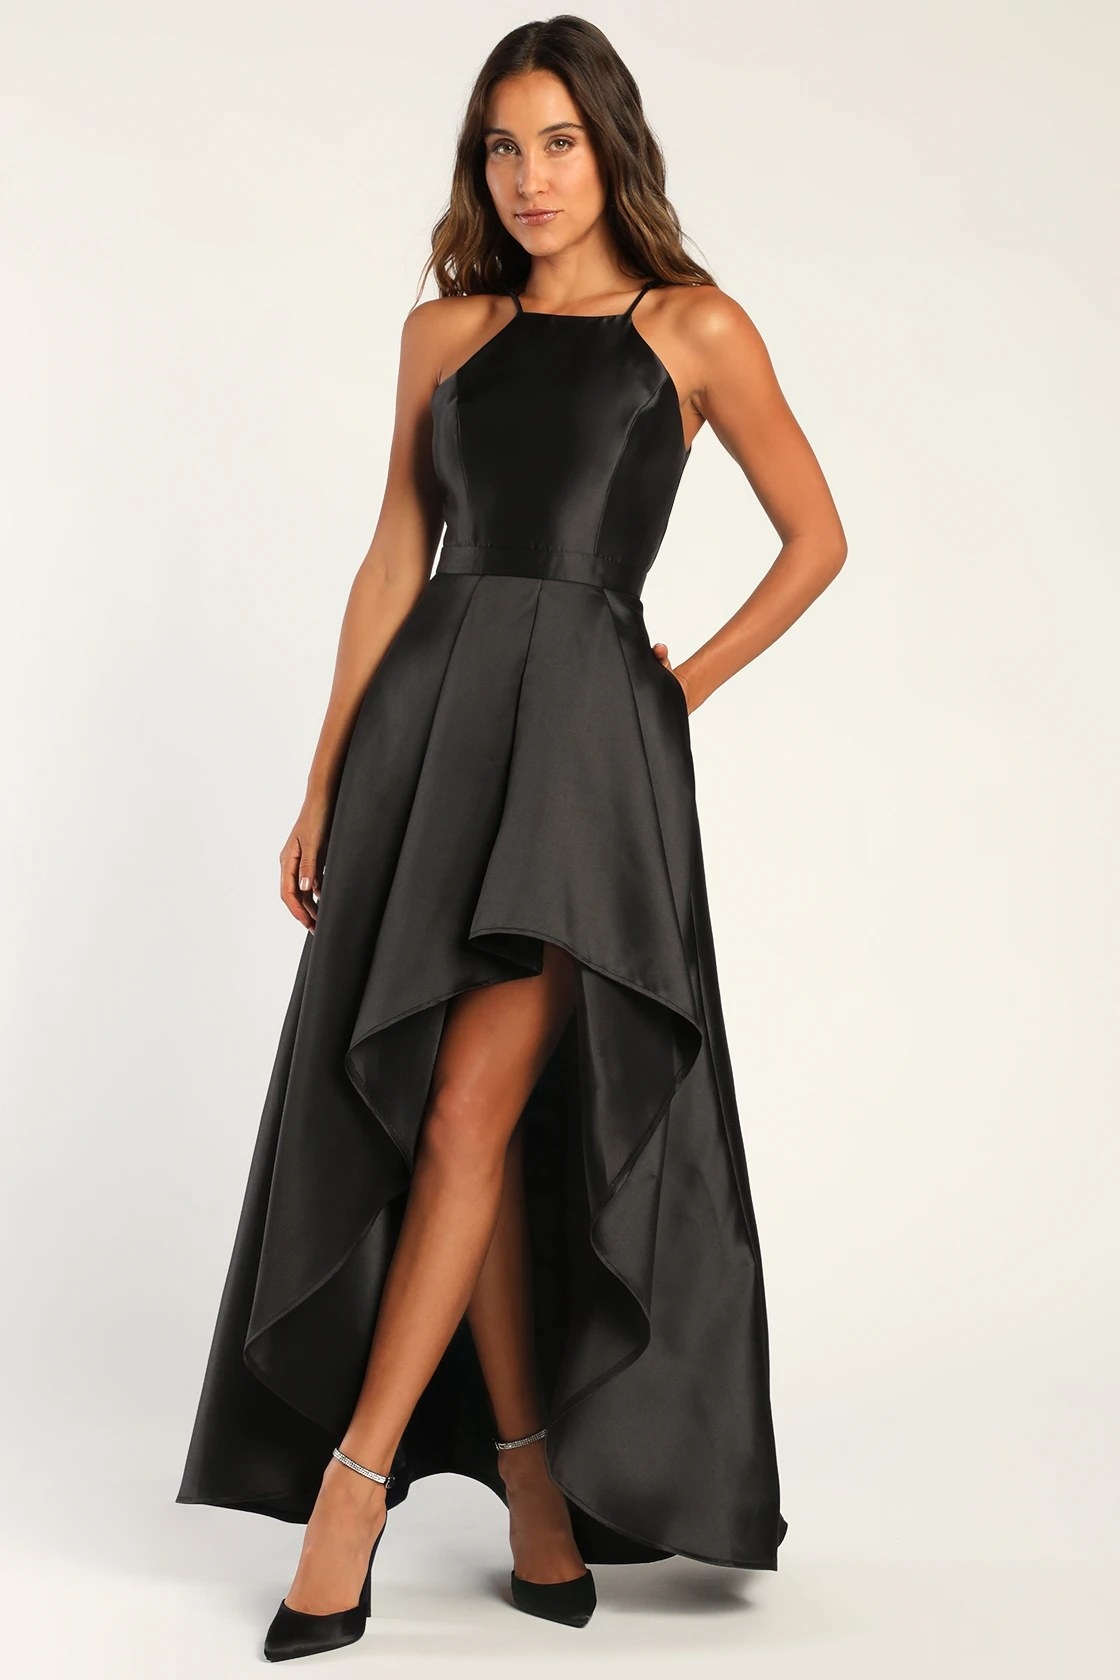 Model wearing black dress with black heels